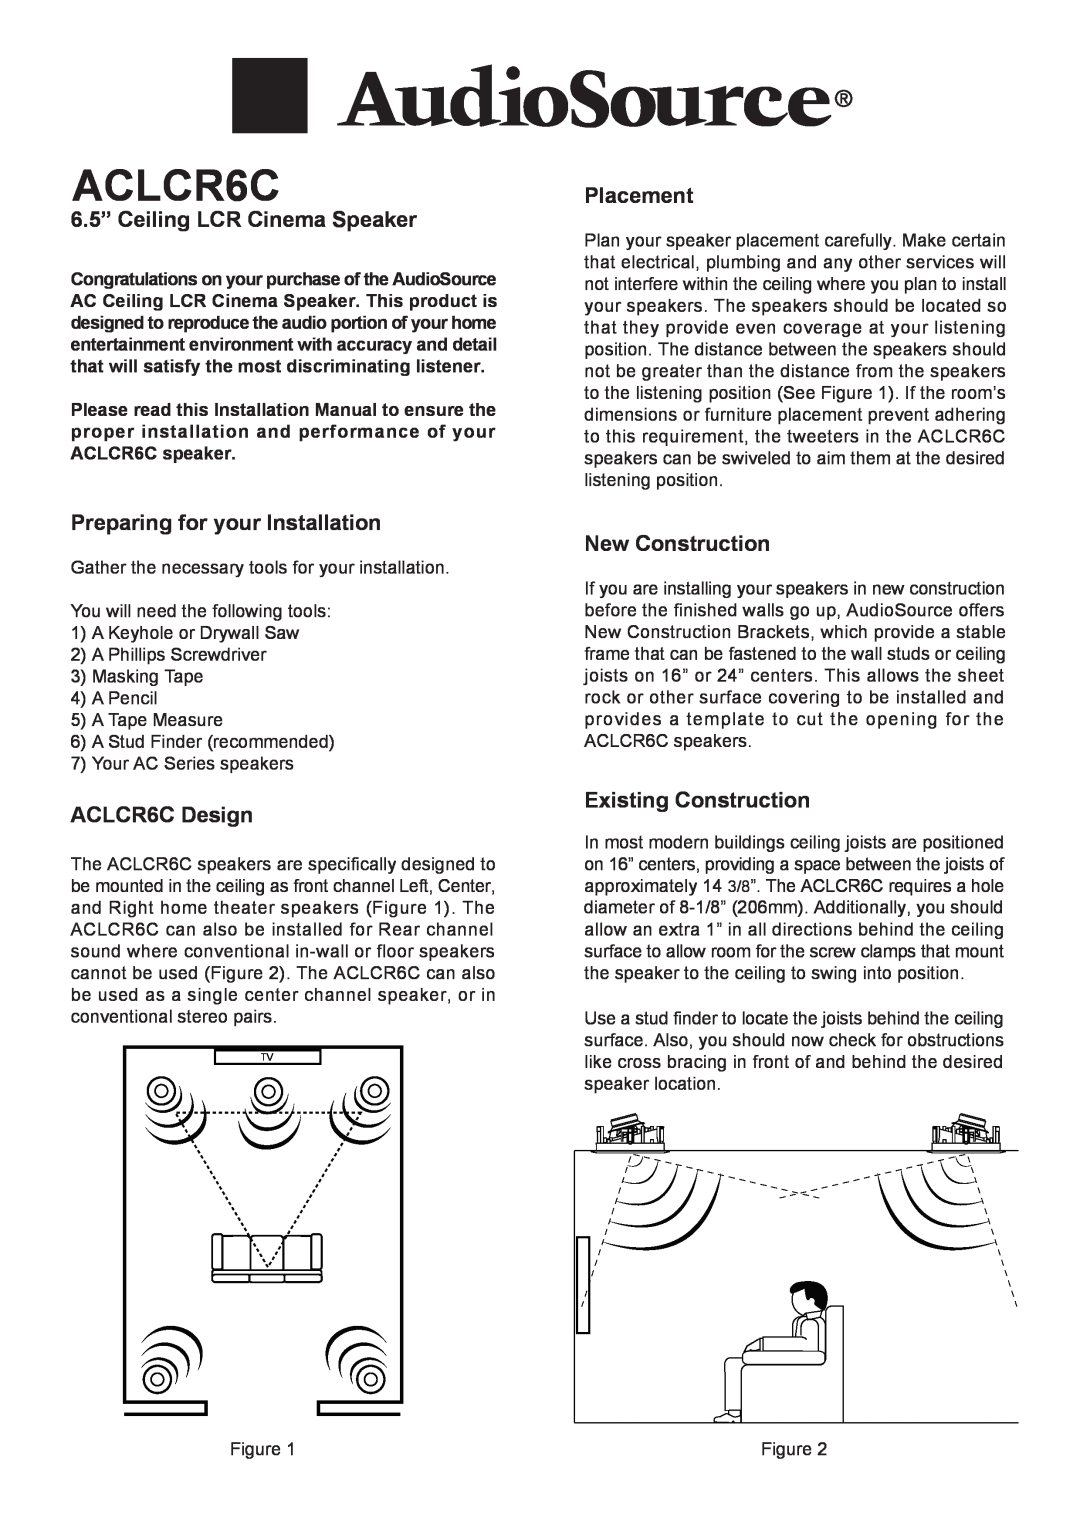 AudioSource 6.5" CEILING LCR CINEMA SPEAKER installation manual 6.5” Ceiling LCR Cinema Speaker, ACLCR6C Design, Placement 